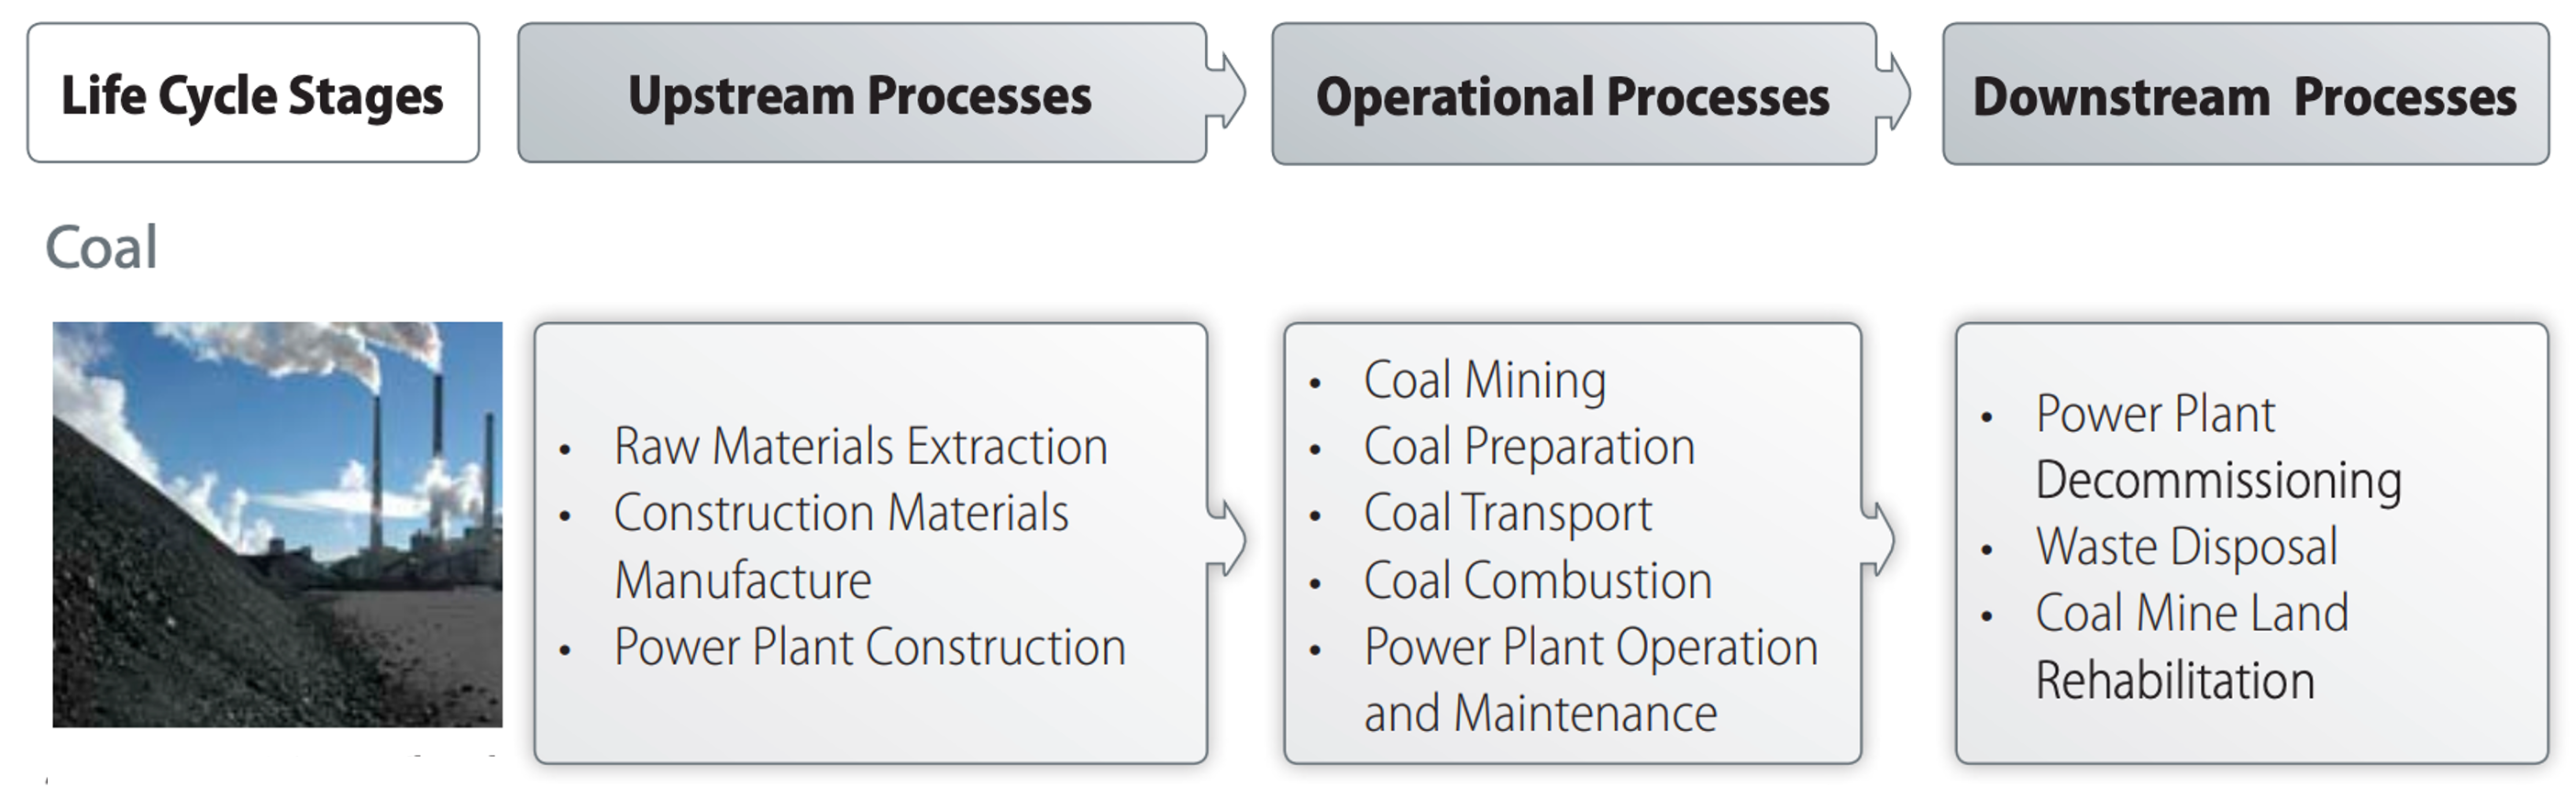 FERA_Coal life cycle_1.png